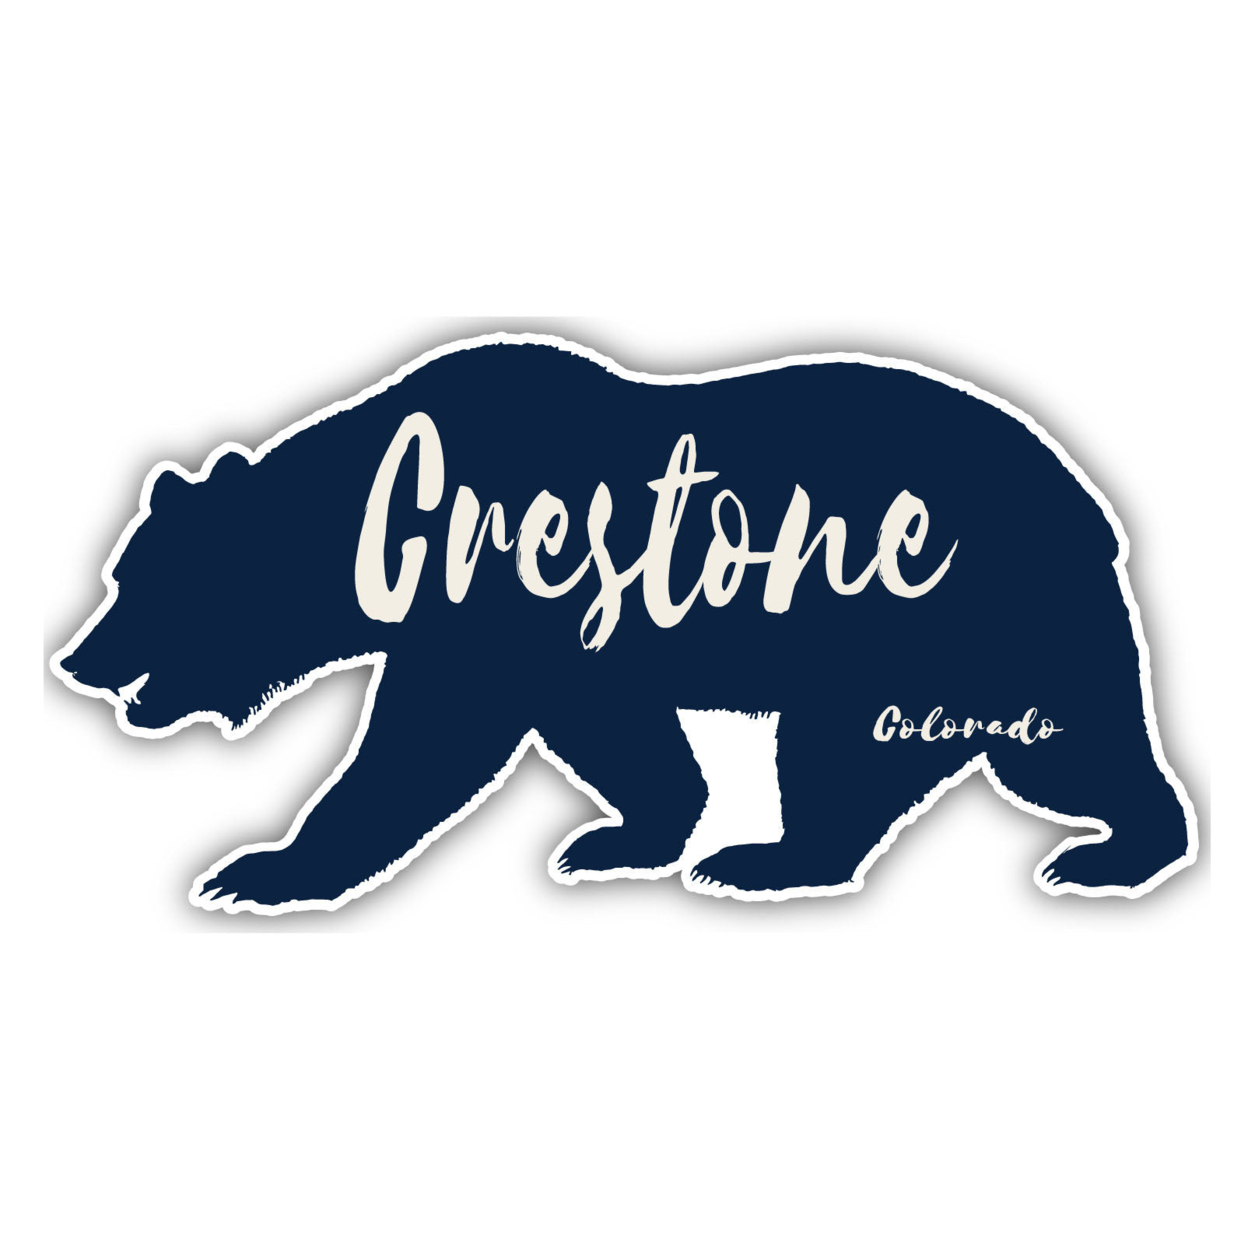 Crestone Colorado Souvenir Decorative Stickers (Choose Theme And Size) - Single Unit, 12-Inch, Tent